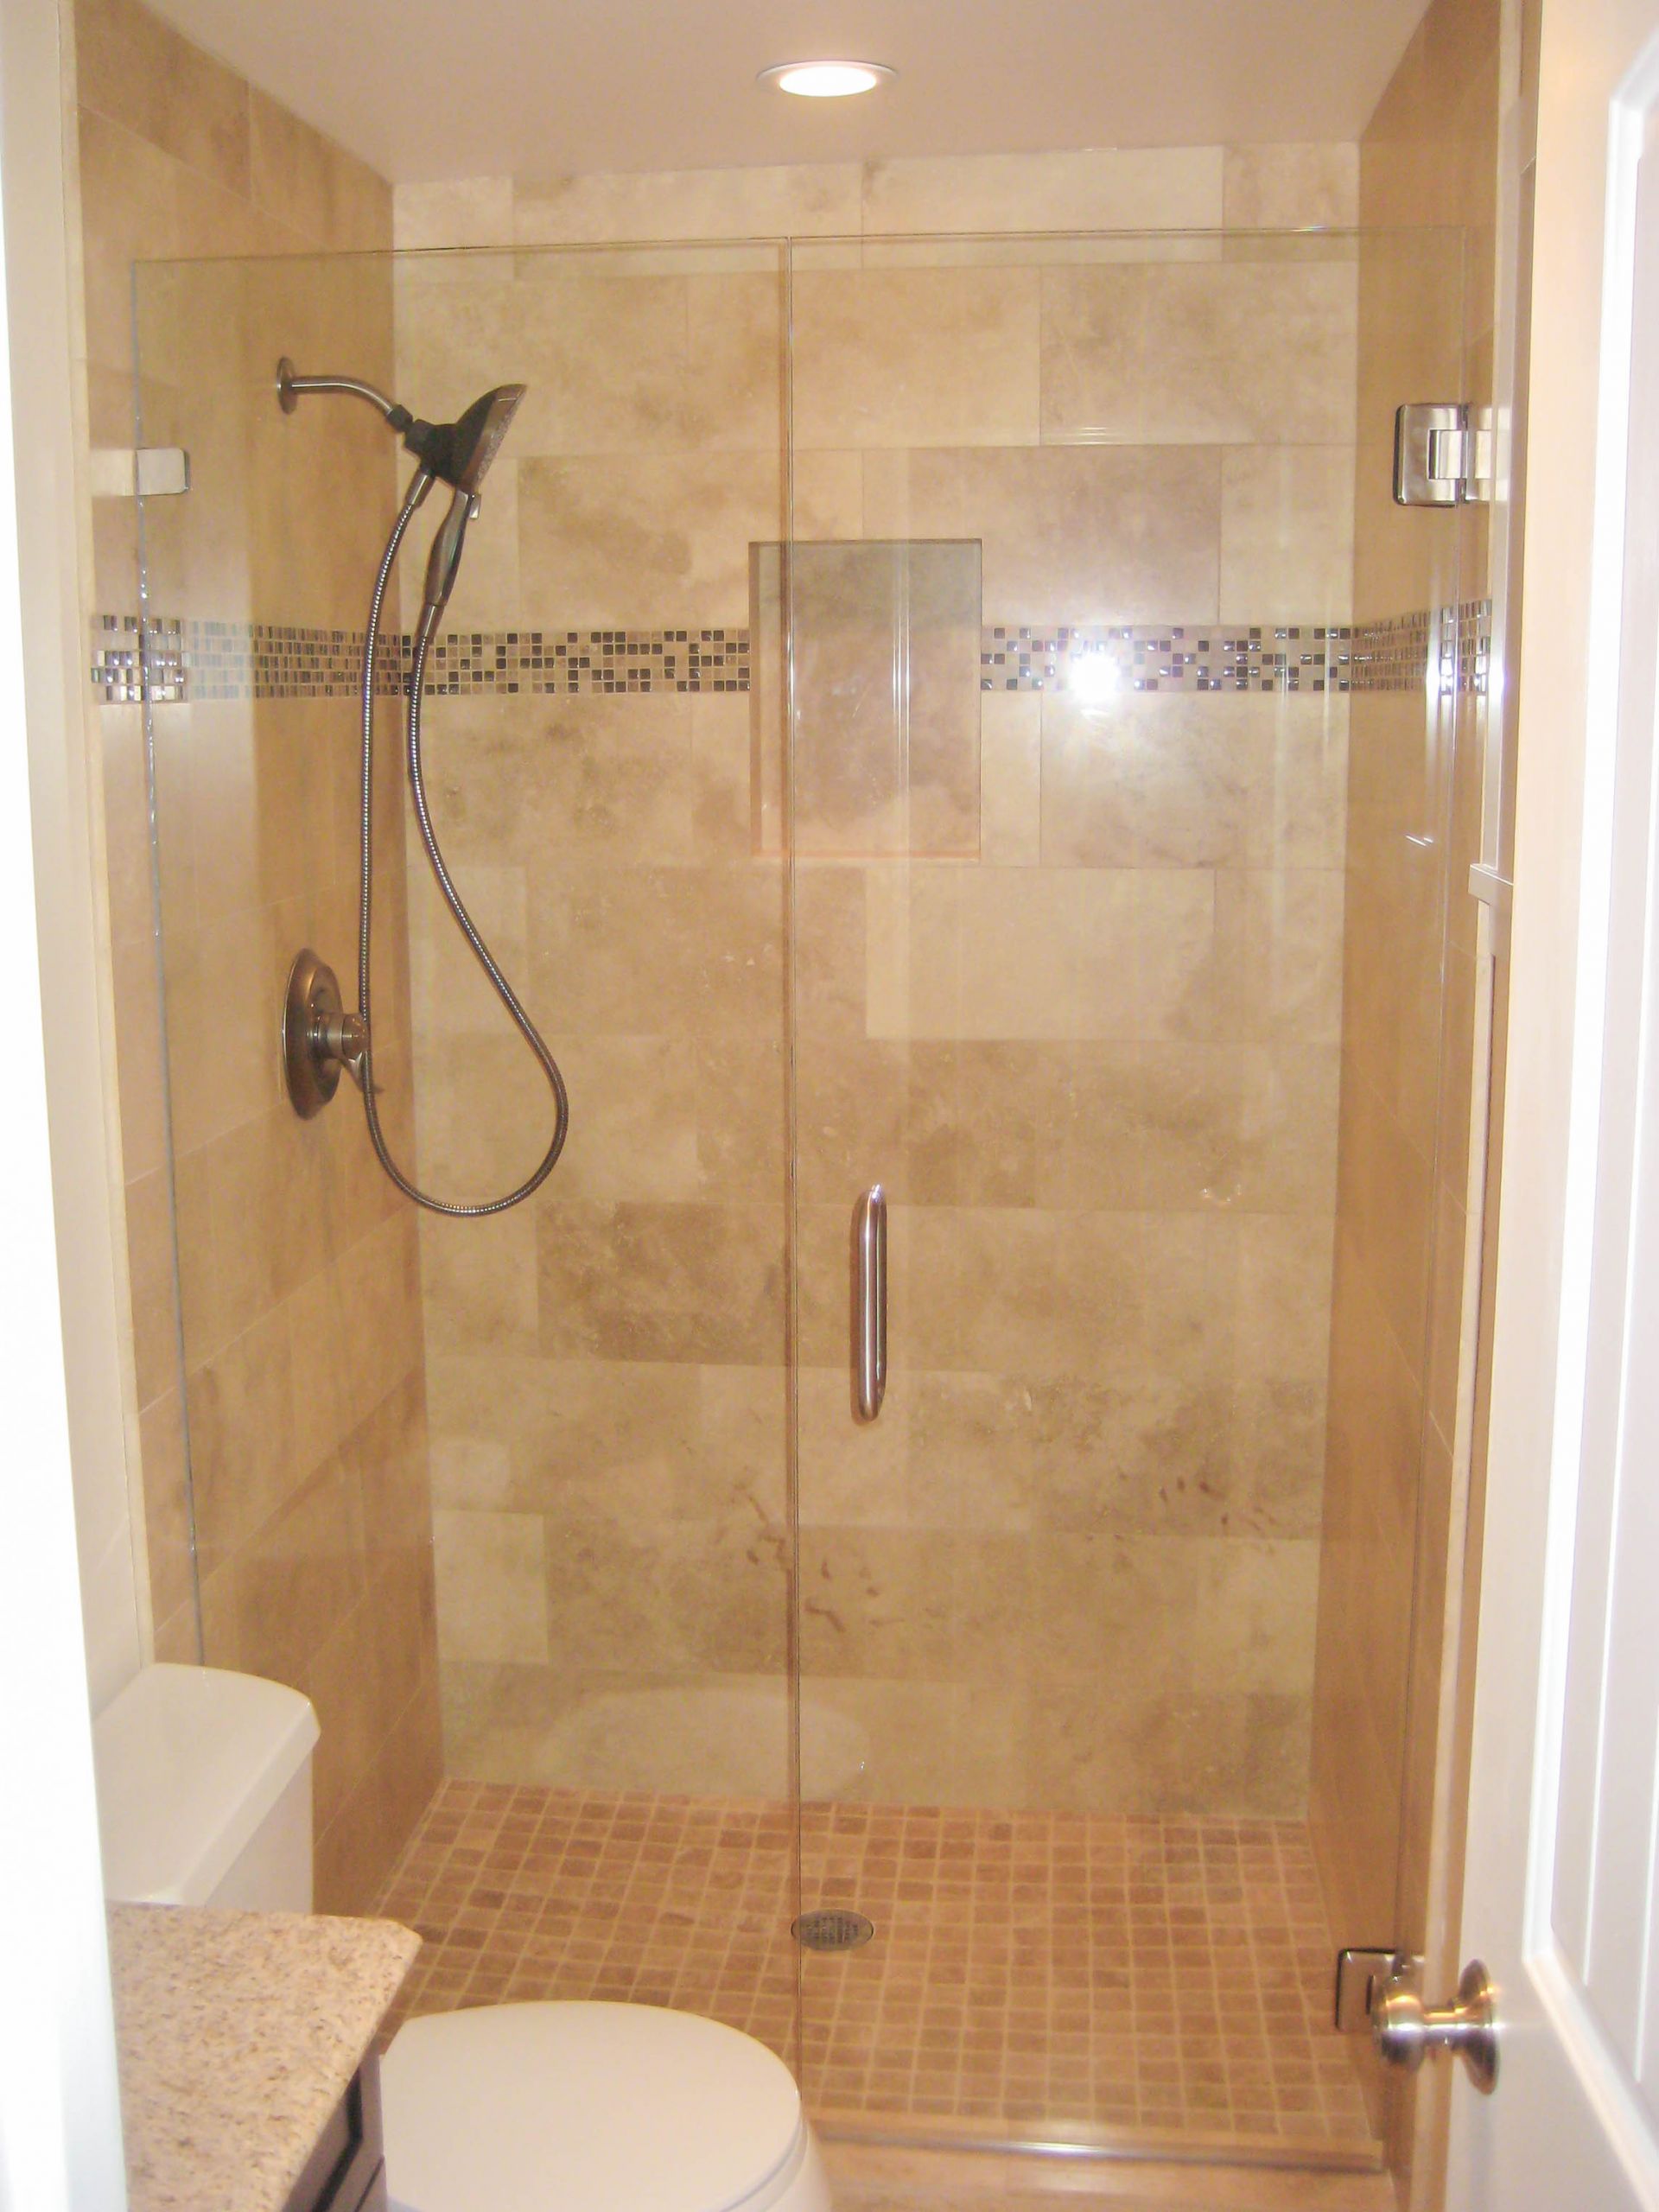 Bathroom Shower Tile Gallery
 Bathroom Showers s Seattle Tile Contractor